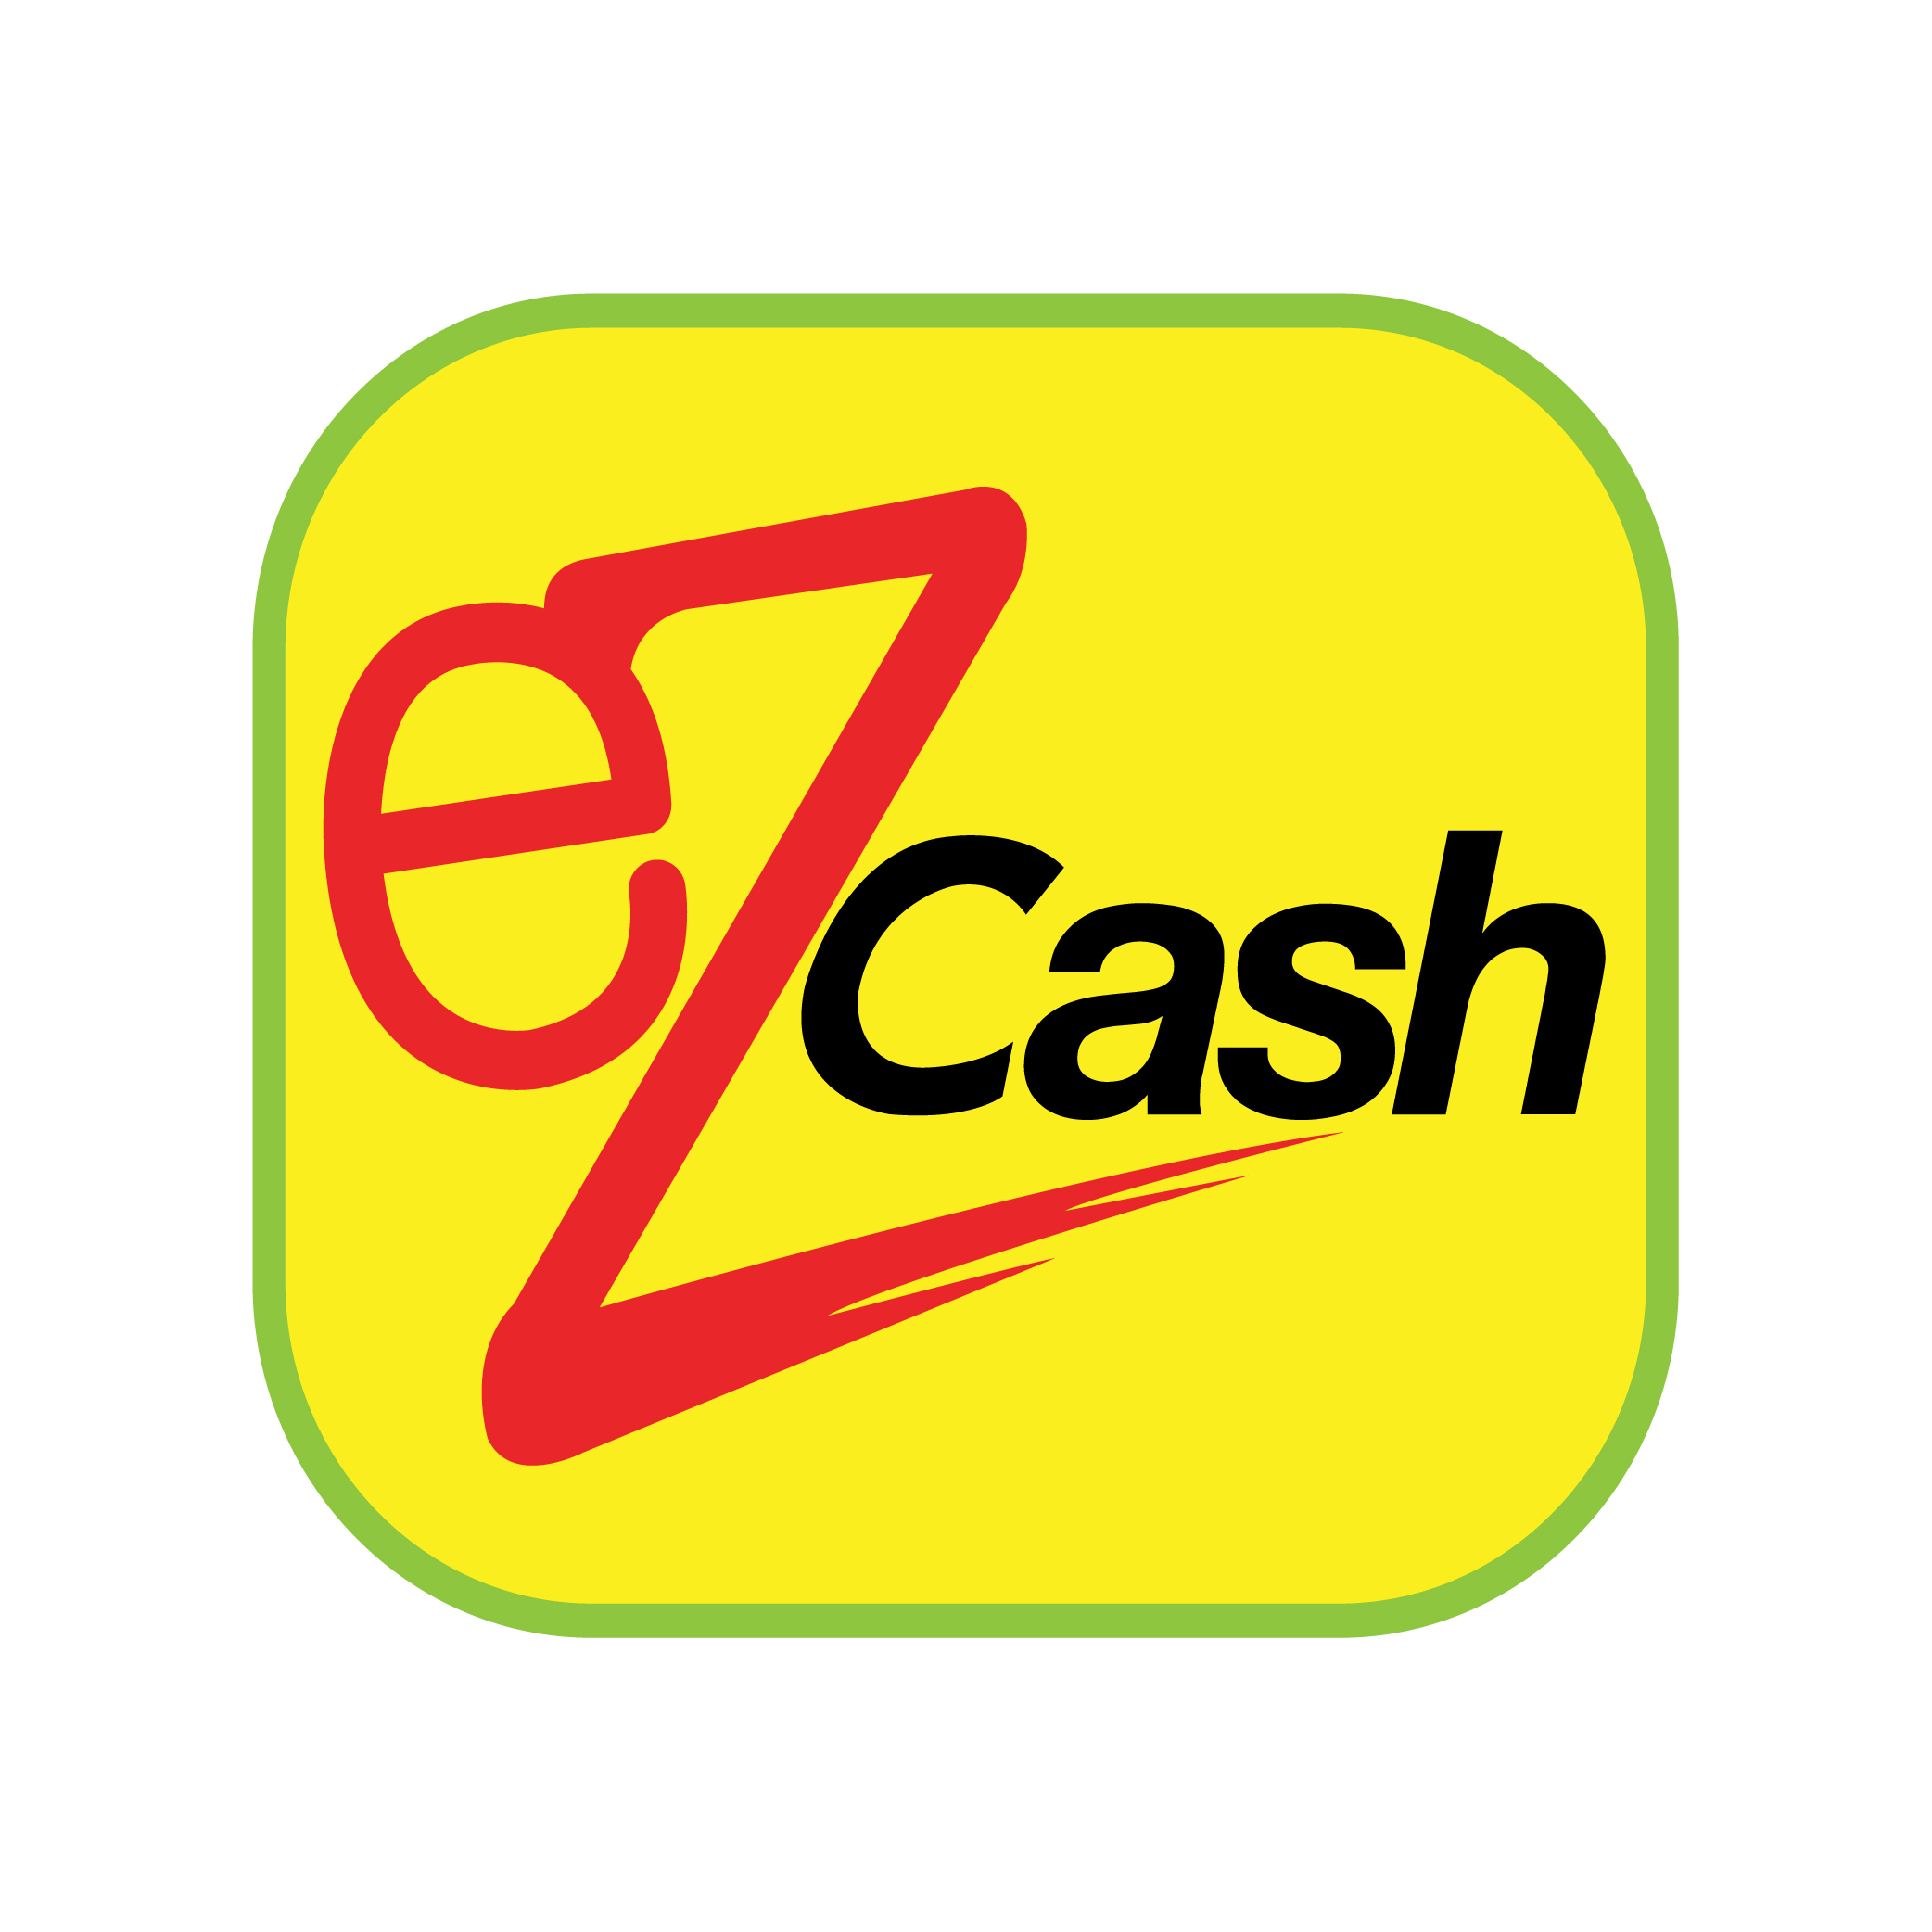 Premium Vector | Cash logo for money transfers